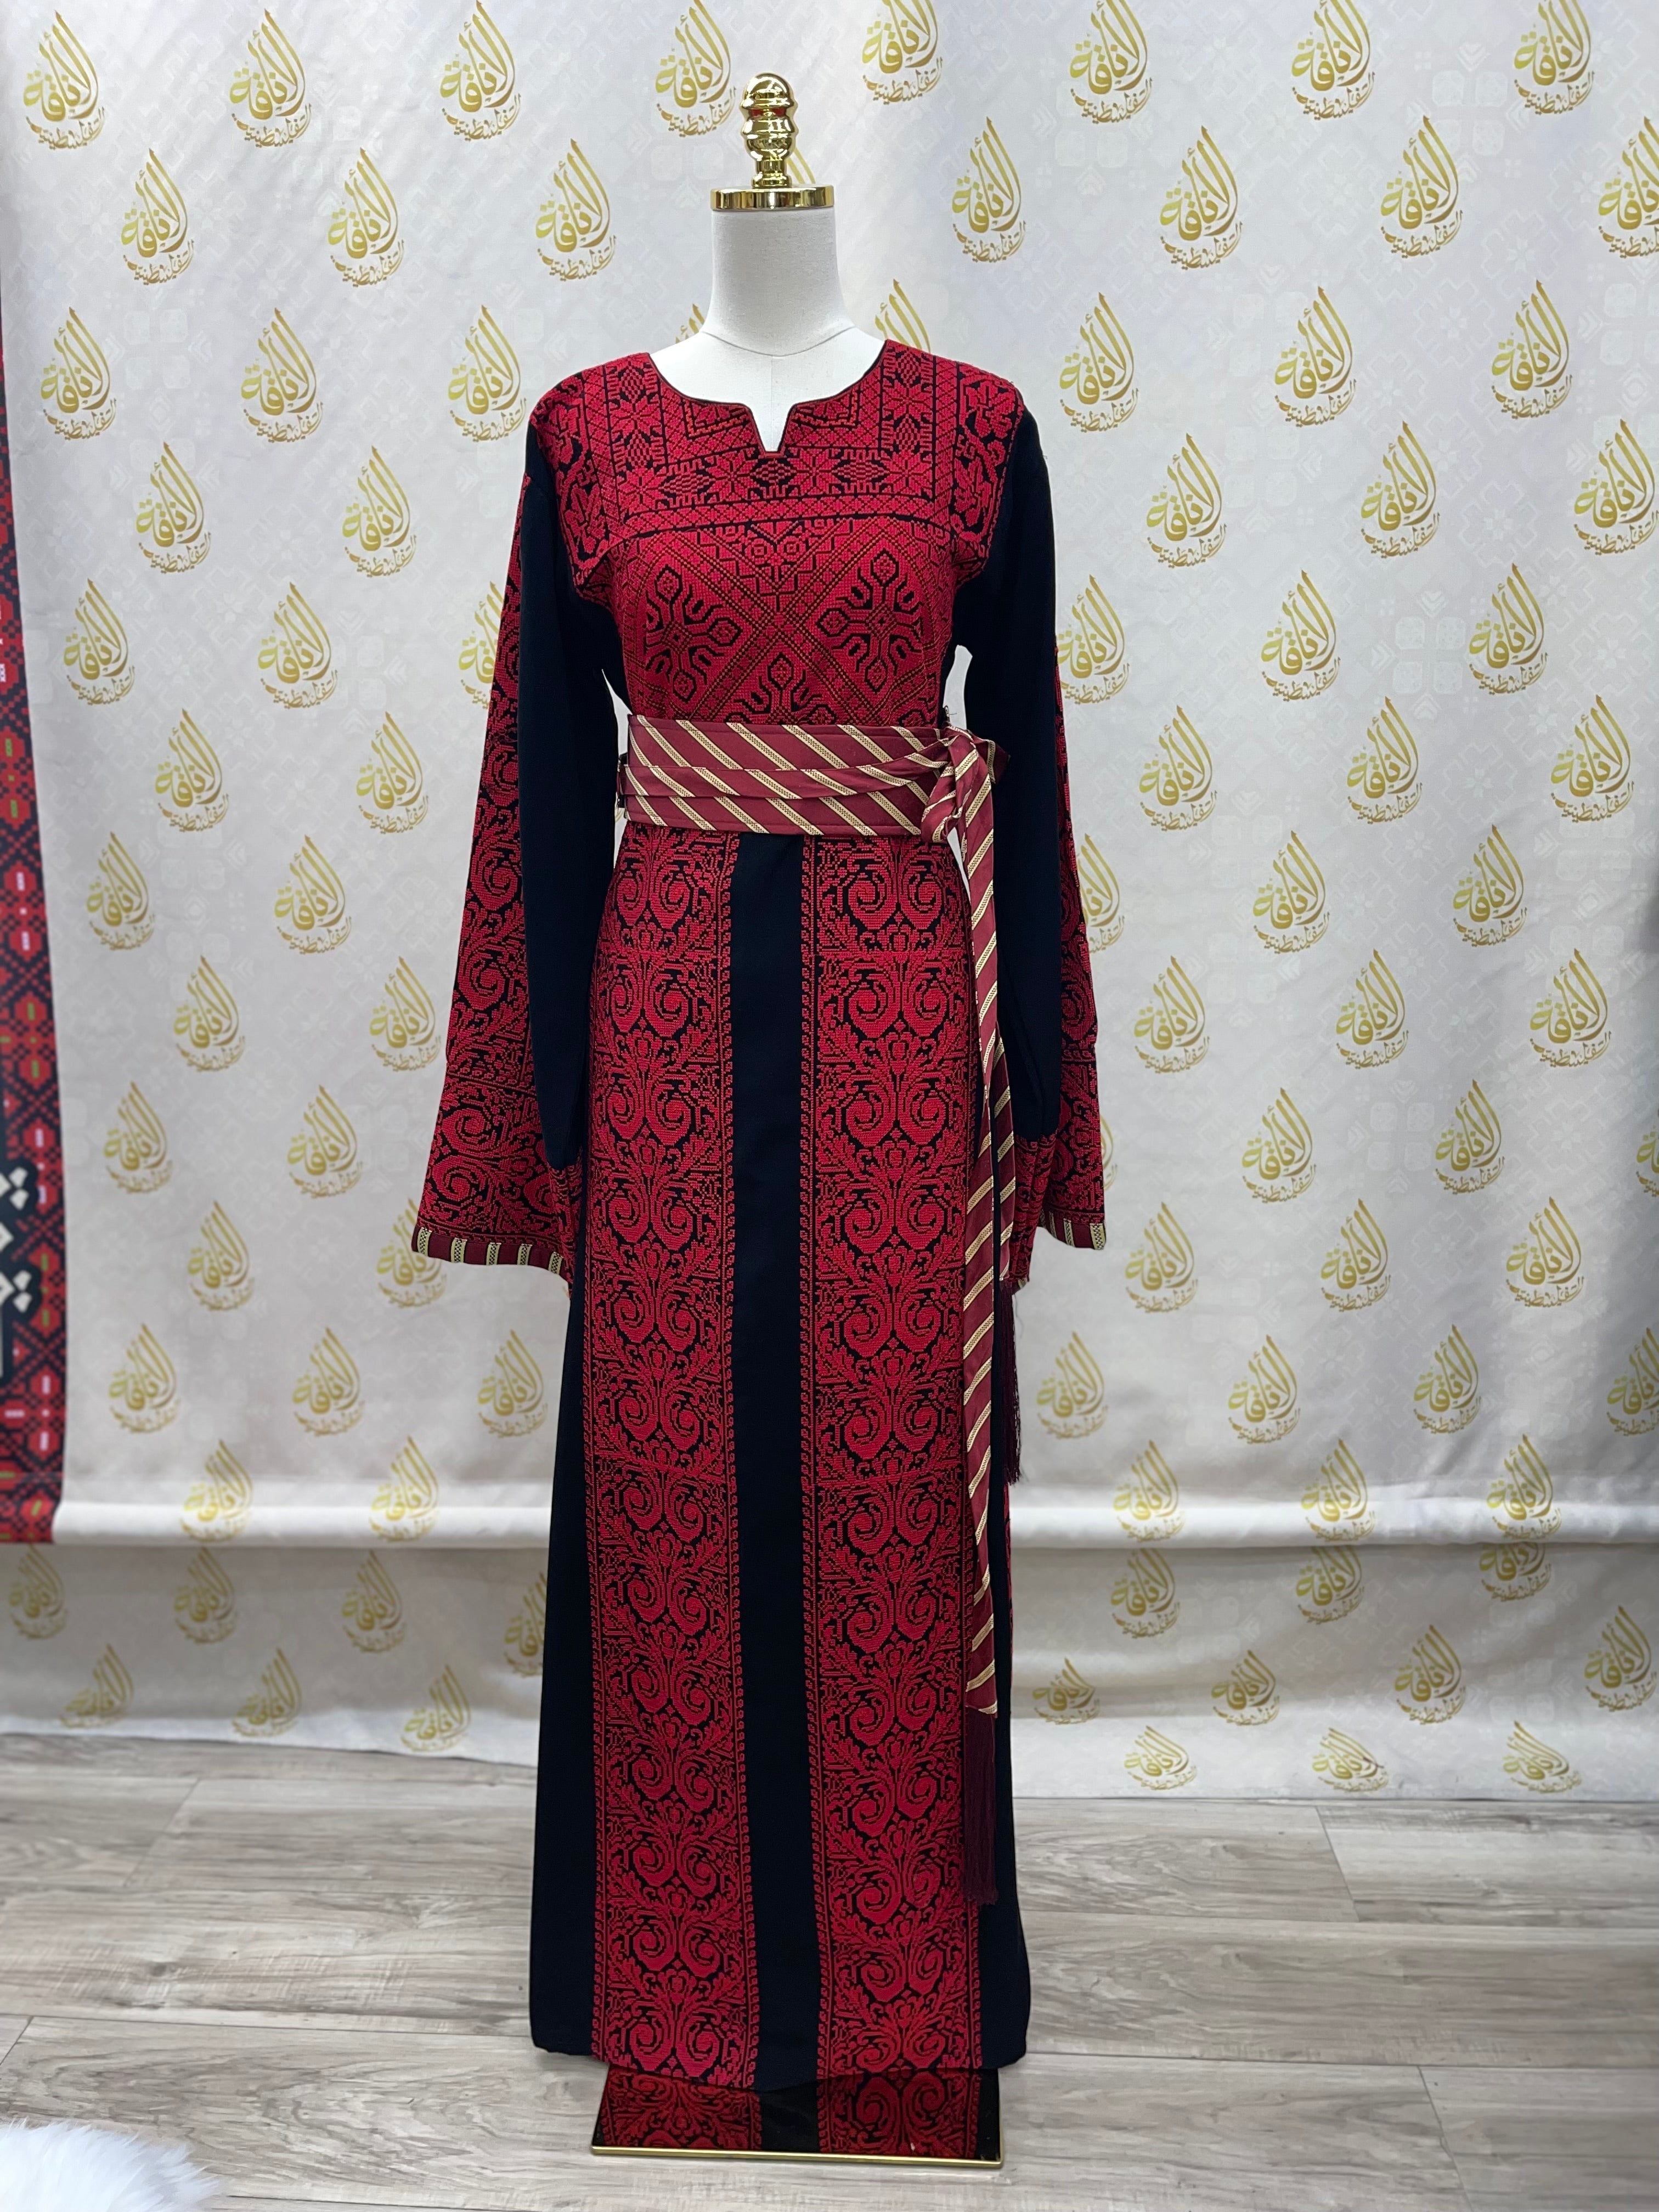 Siti Embroidery Thoub 6 Veins